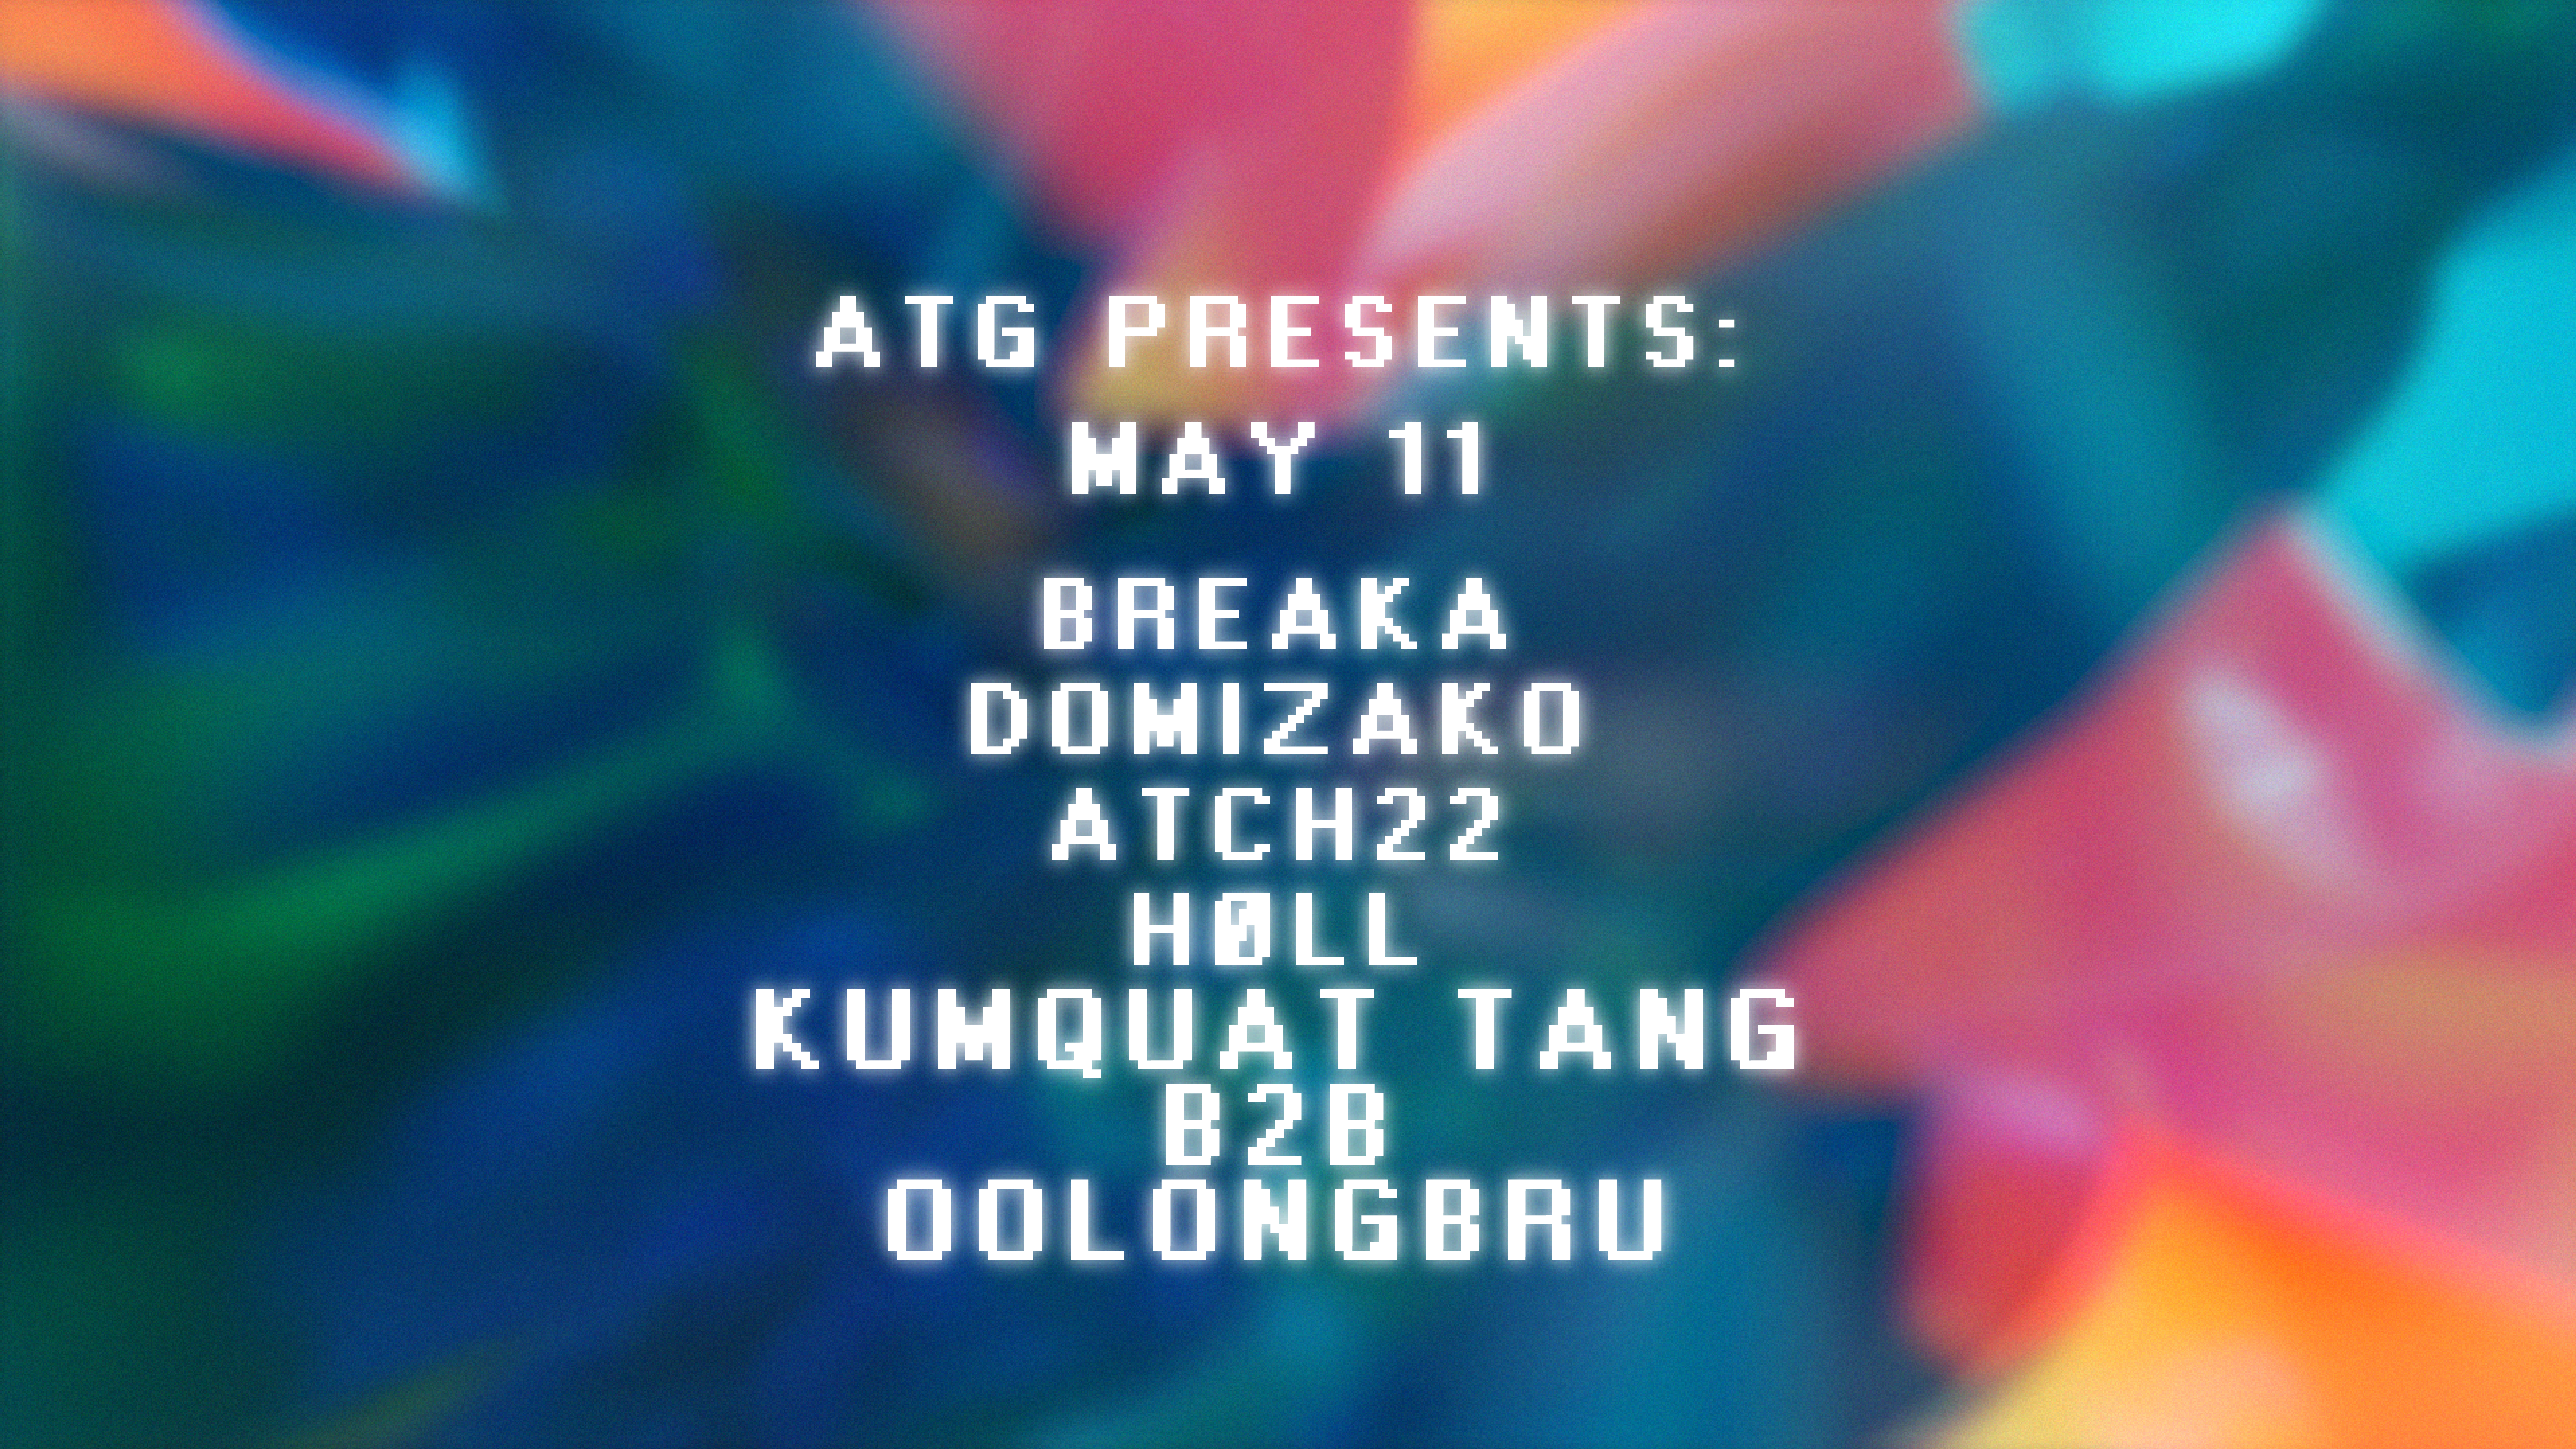 [CANCELLED] ATG presents: Breaka (UK), domizako, Atch22, Høll, Kumquat Tang b2b oolongbru - フライヤー表